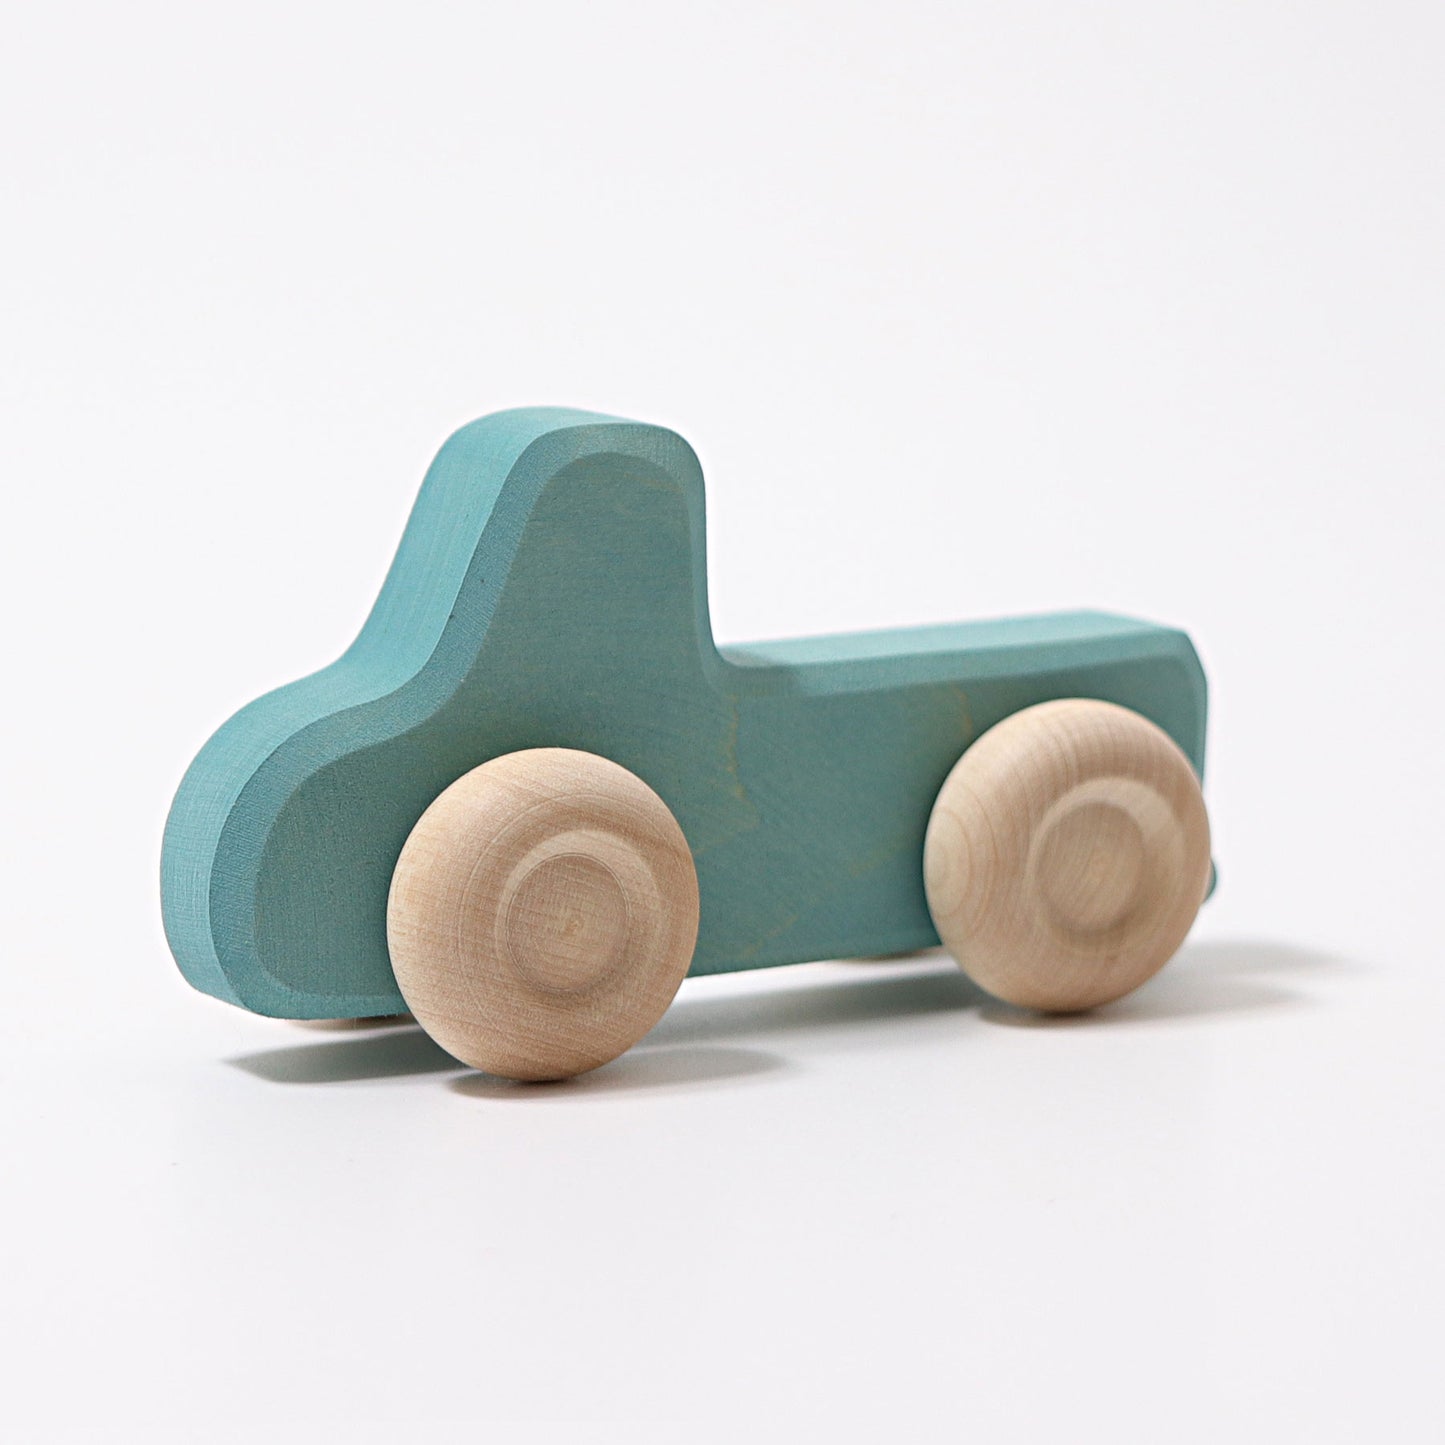 Grimm's Wooden Cars Slimline - Bueno Blocks